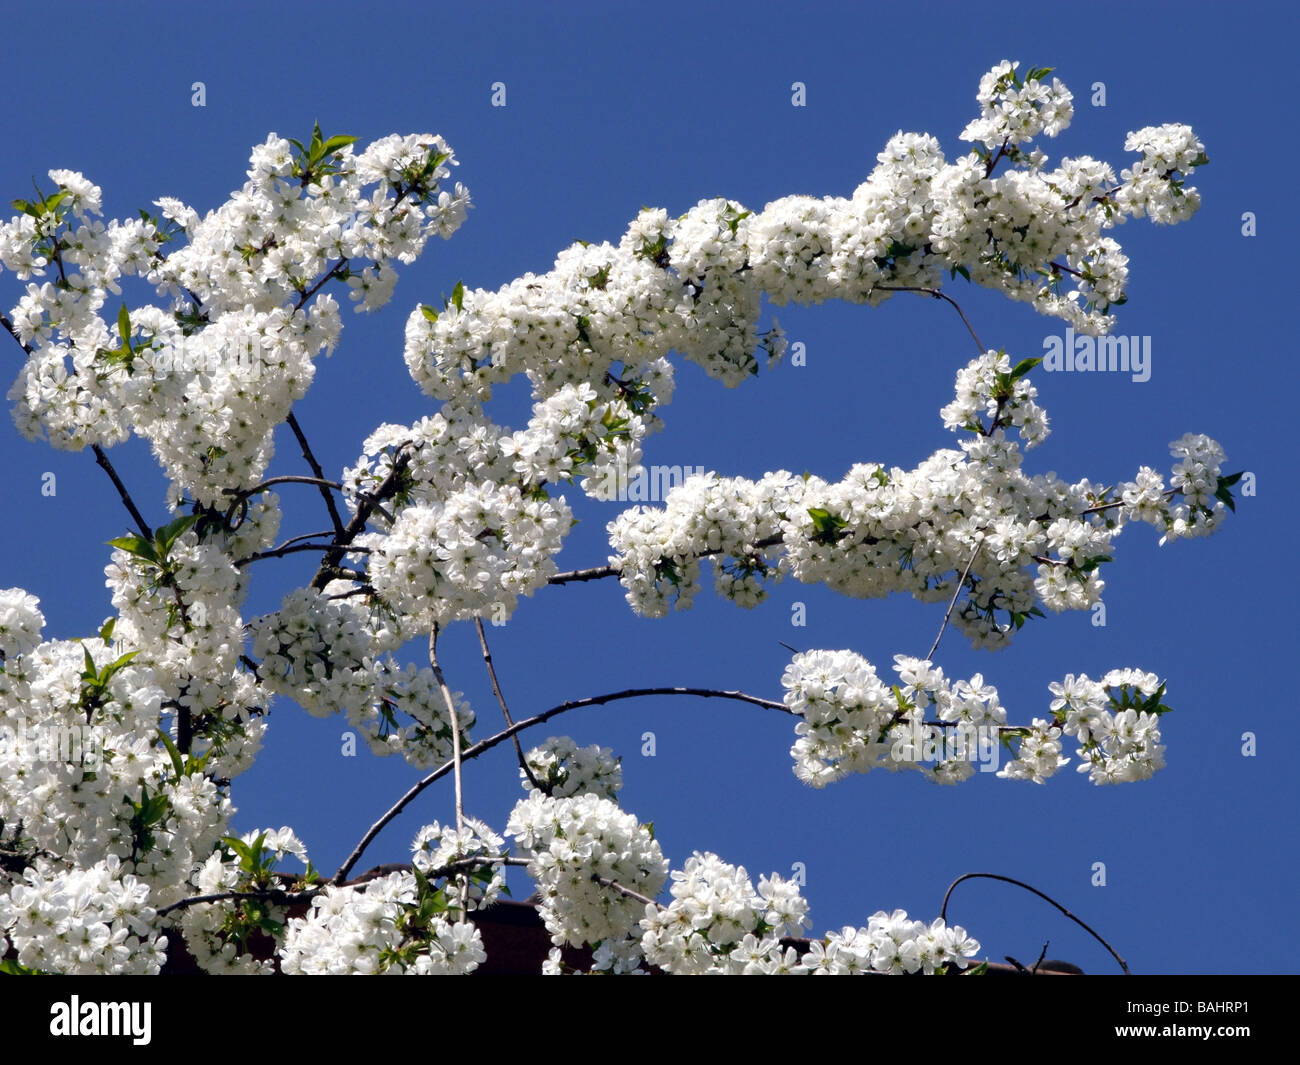 White Flowering Cherry Tree in Bloom Against Blue Sky. Stock Photo